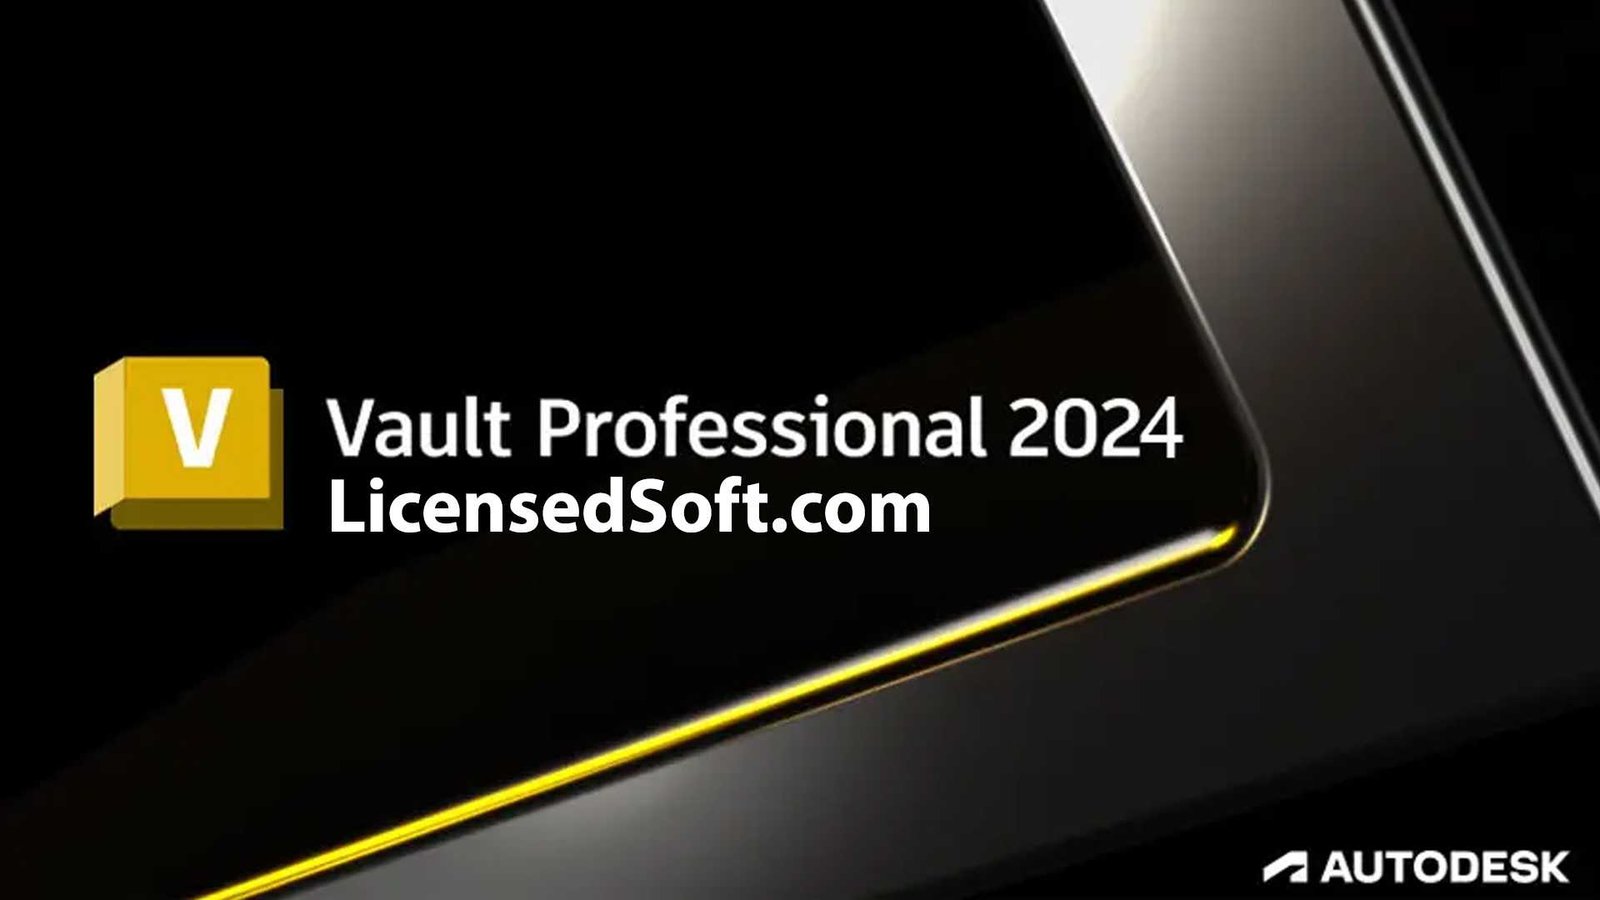 Autodesk Vault Professional Server 2024.1 Cover Image By LicensedSoft